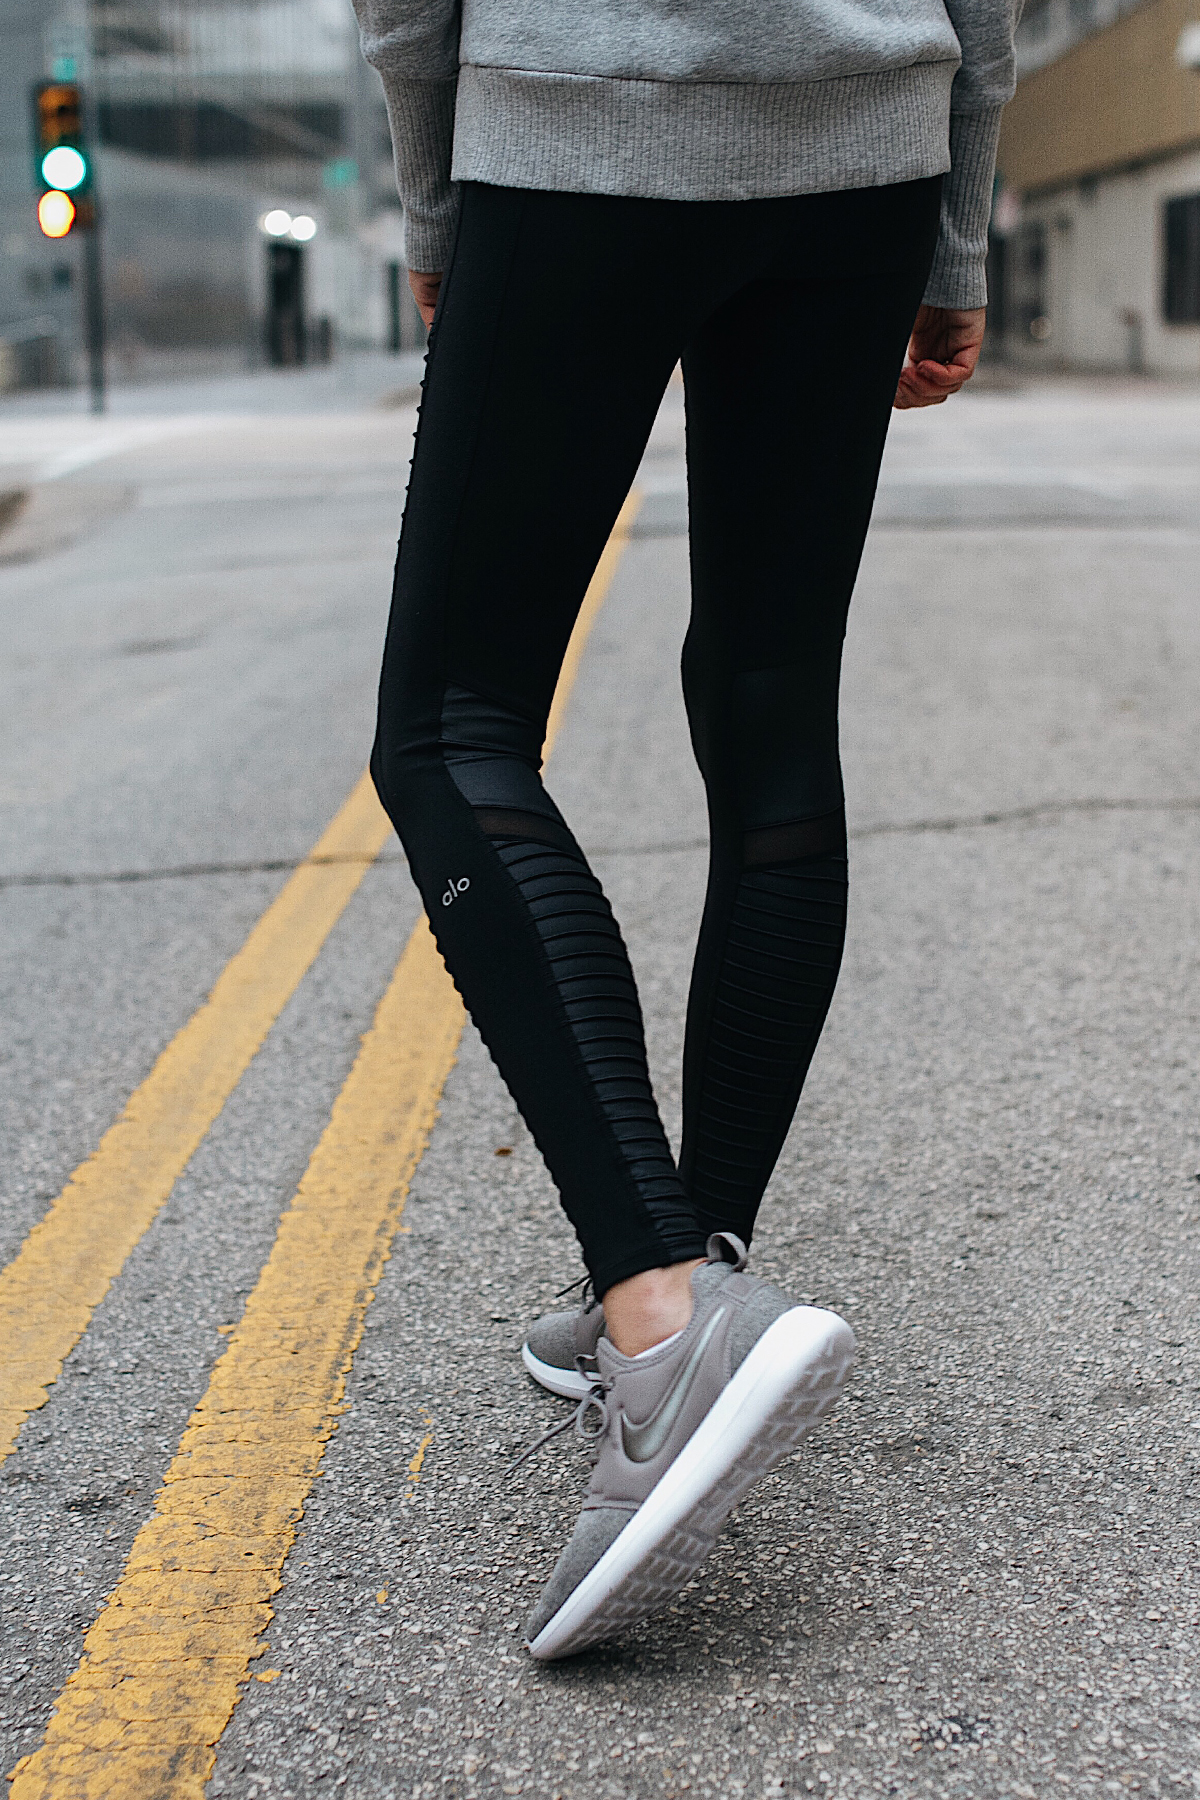 Alo Black Moto Leggings Nike Roshe Two Knit Grey Sneakers Fashion Jackson Dallas Blogger Fashion Blogger Street Style Athletic Workout Apparel